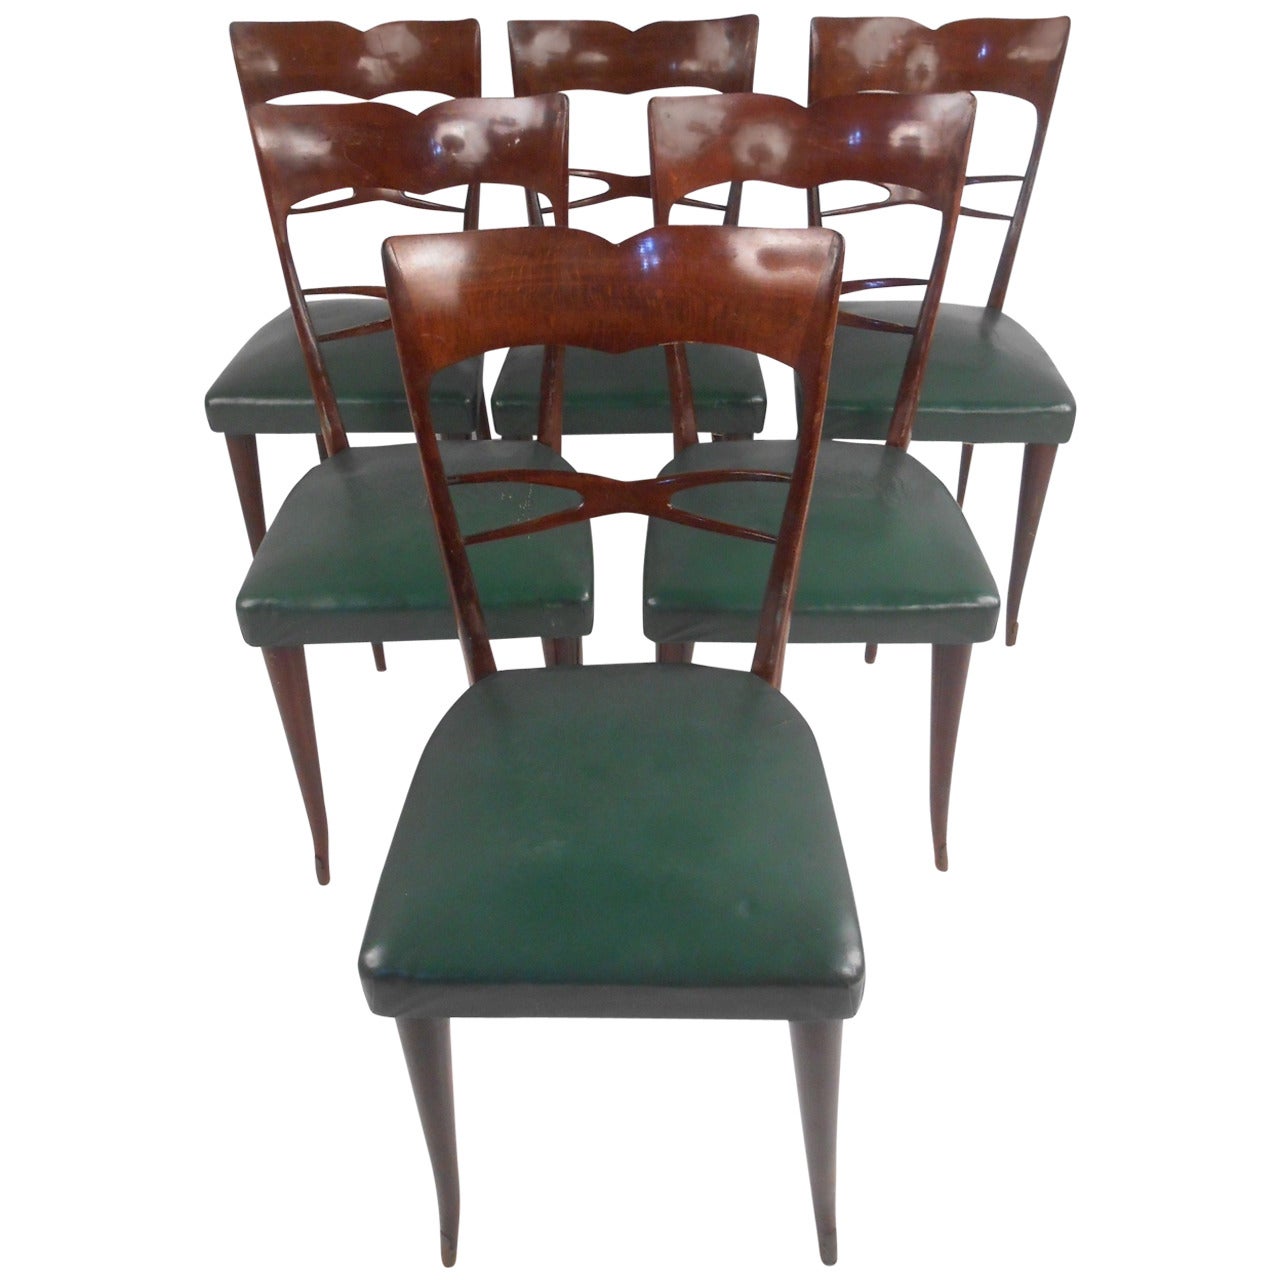 Set of Guglielmo Ulrich Style Mid-Century Modern Italian Dining Chairs